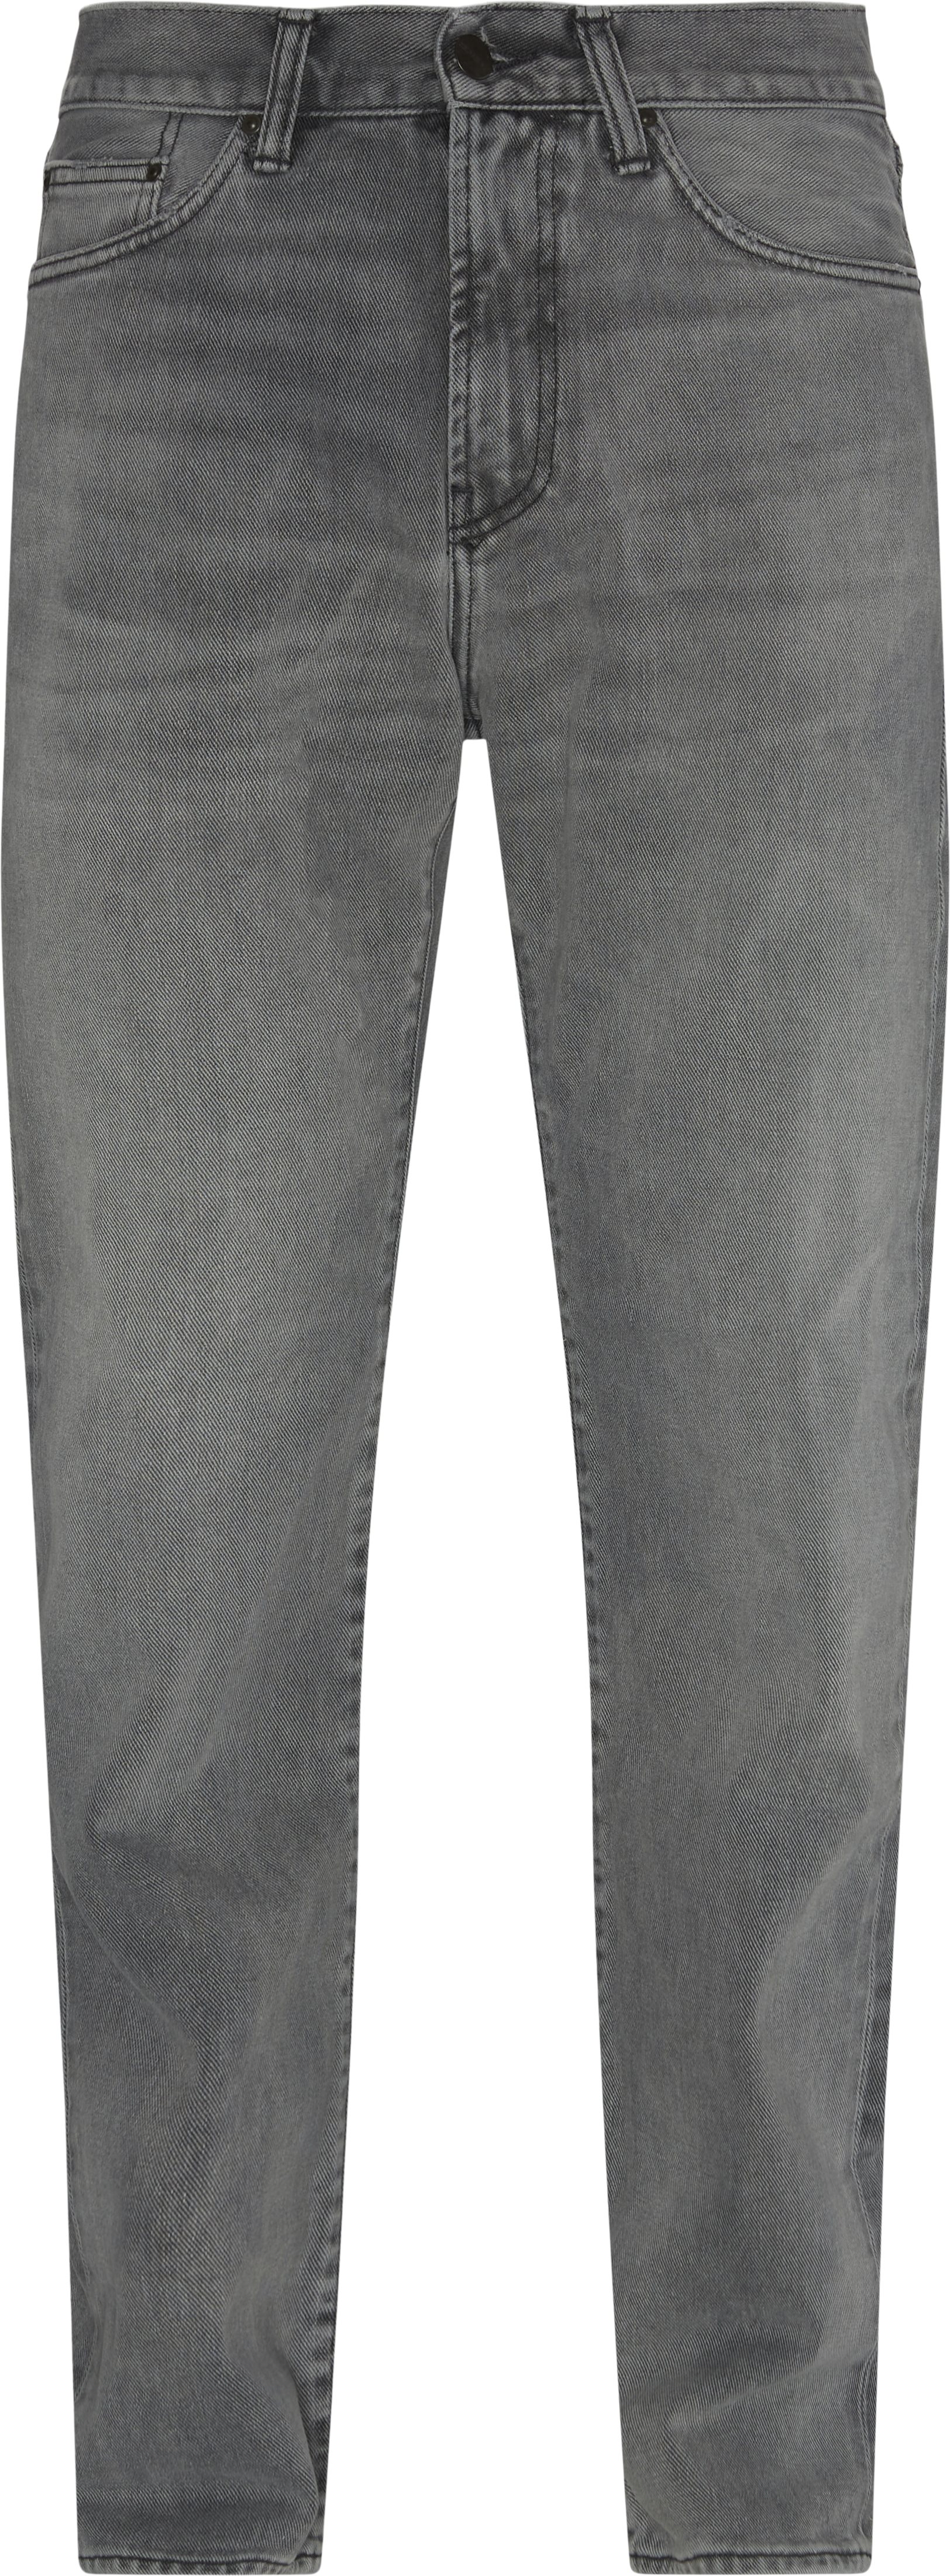 Pontiac Pant I027231 - Jeans - Straight fit - Svart